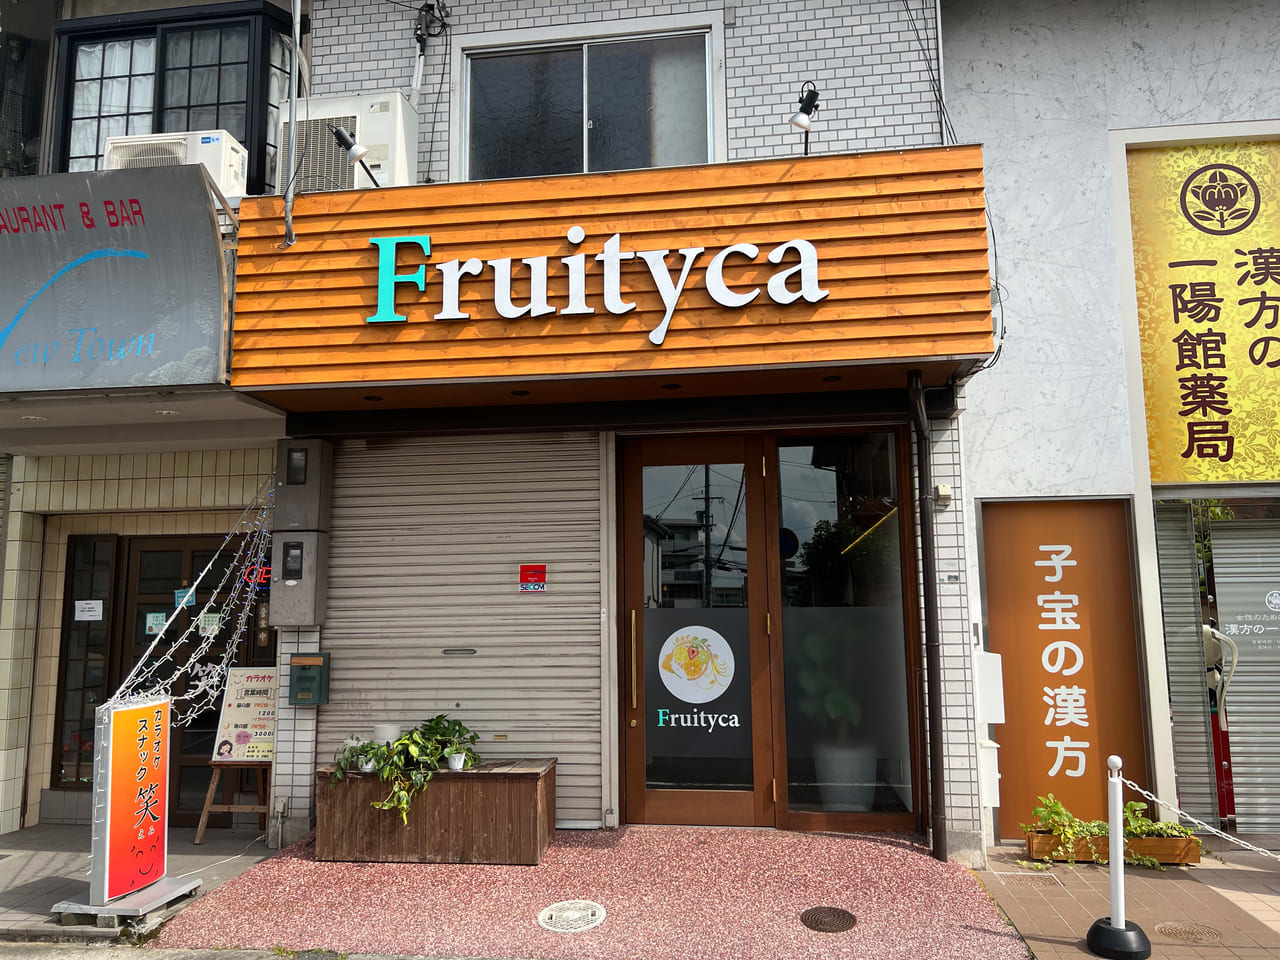 Fruityca(ﾌﾙｰﾃｨｶ)酵素ランチ&ロースイーツ